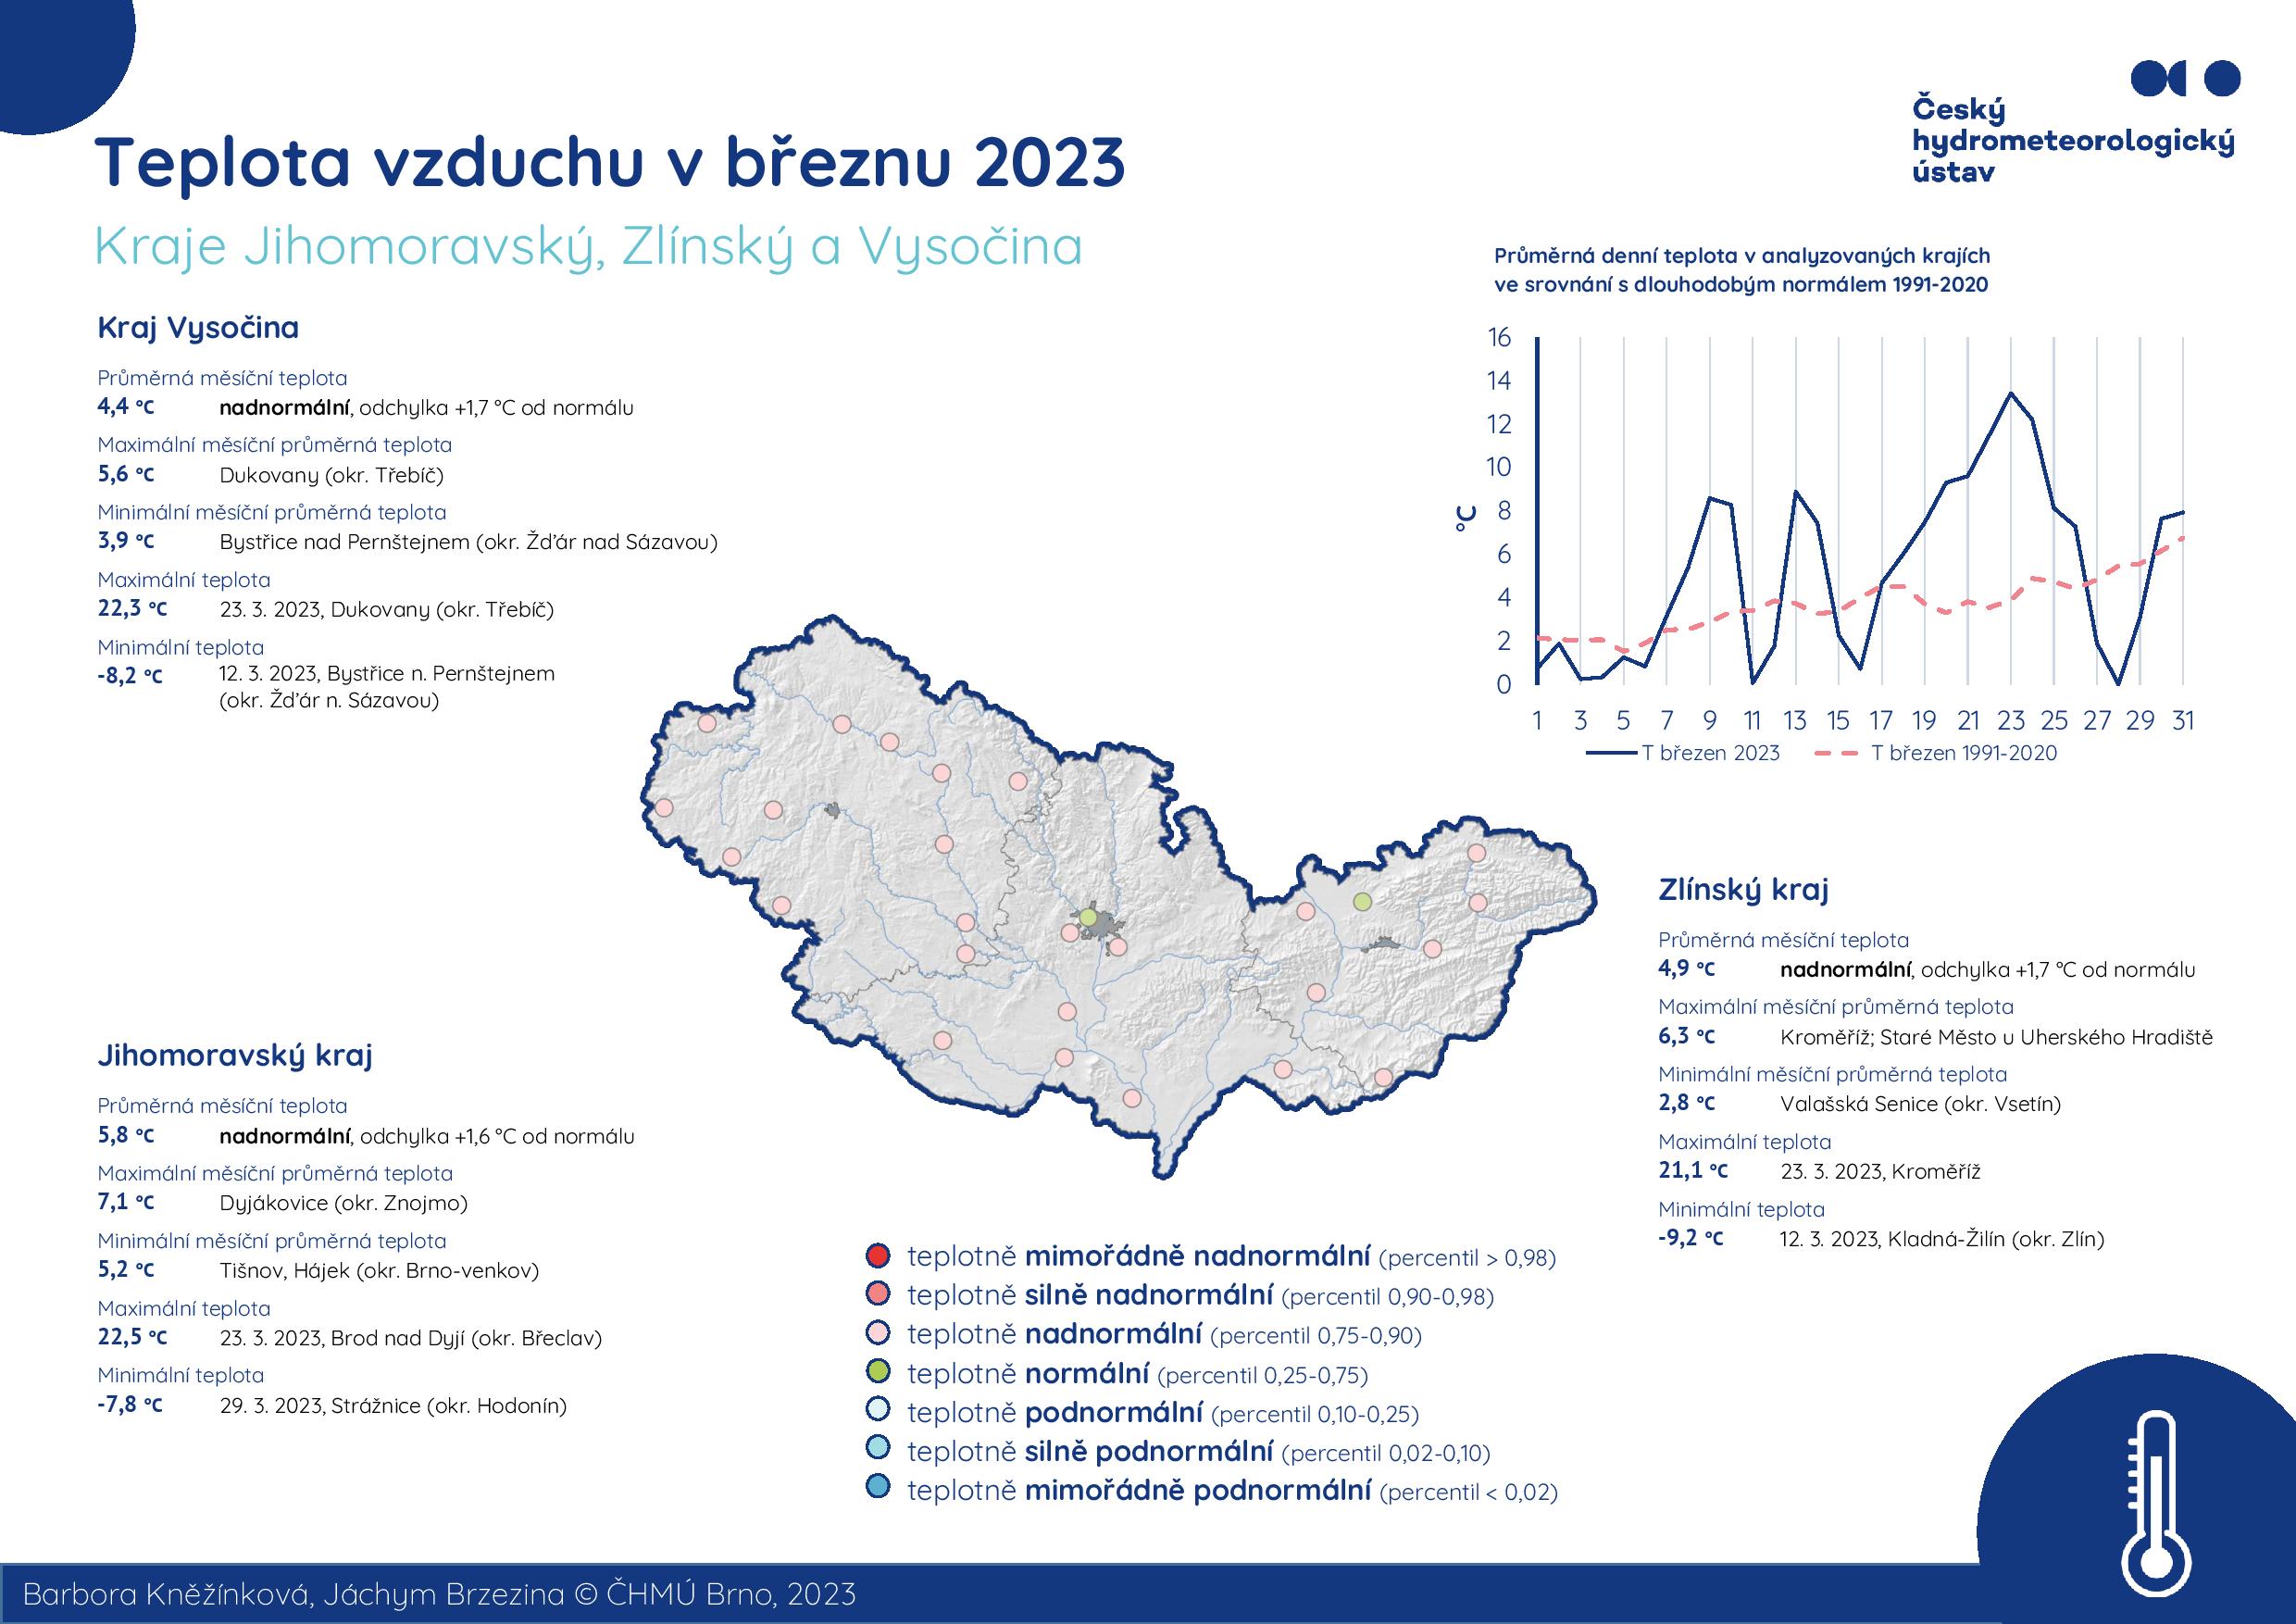 Teplota vzduchu v březnu 2023 – Jihomoravský kraj, Zlínský kraj a Kraj Vysočina1 min čtení